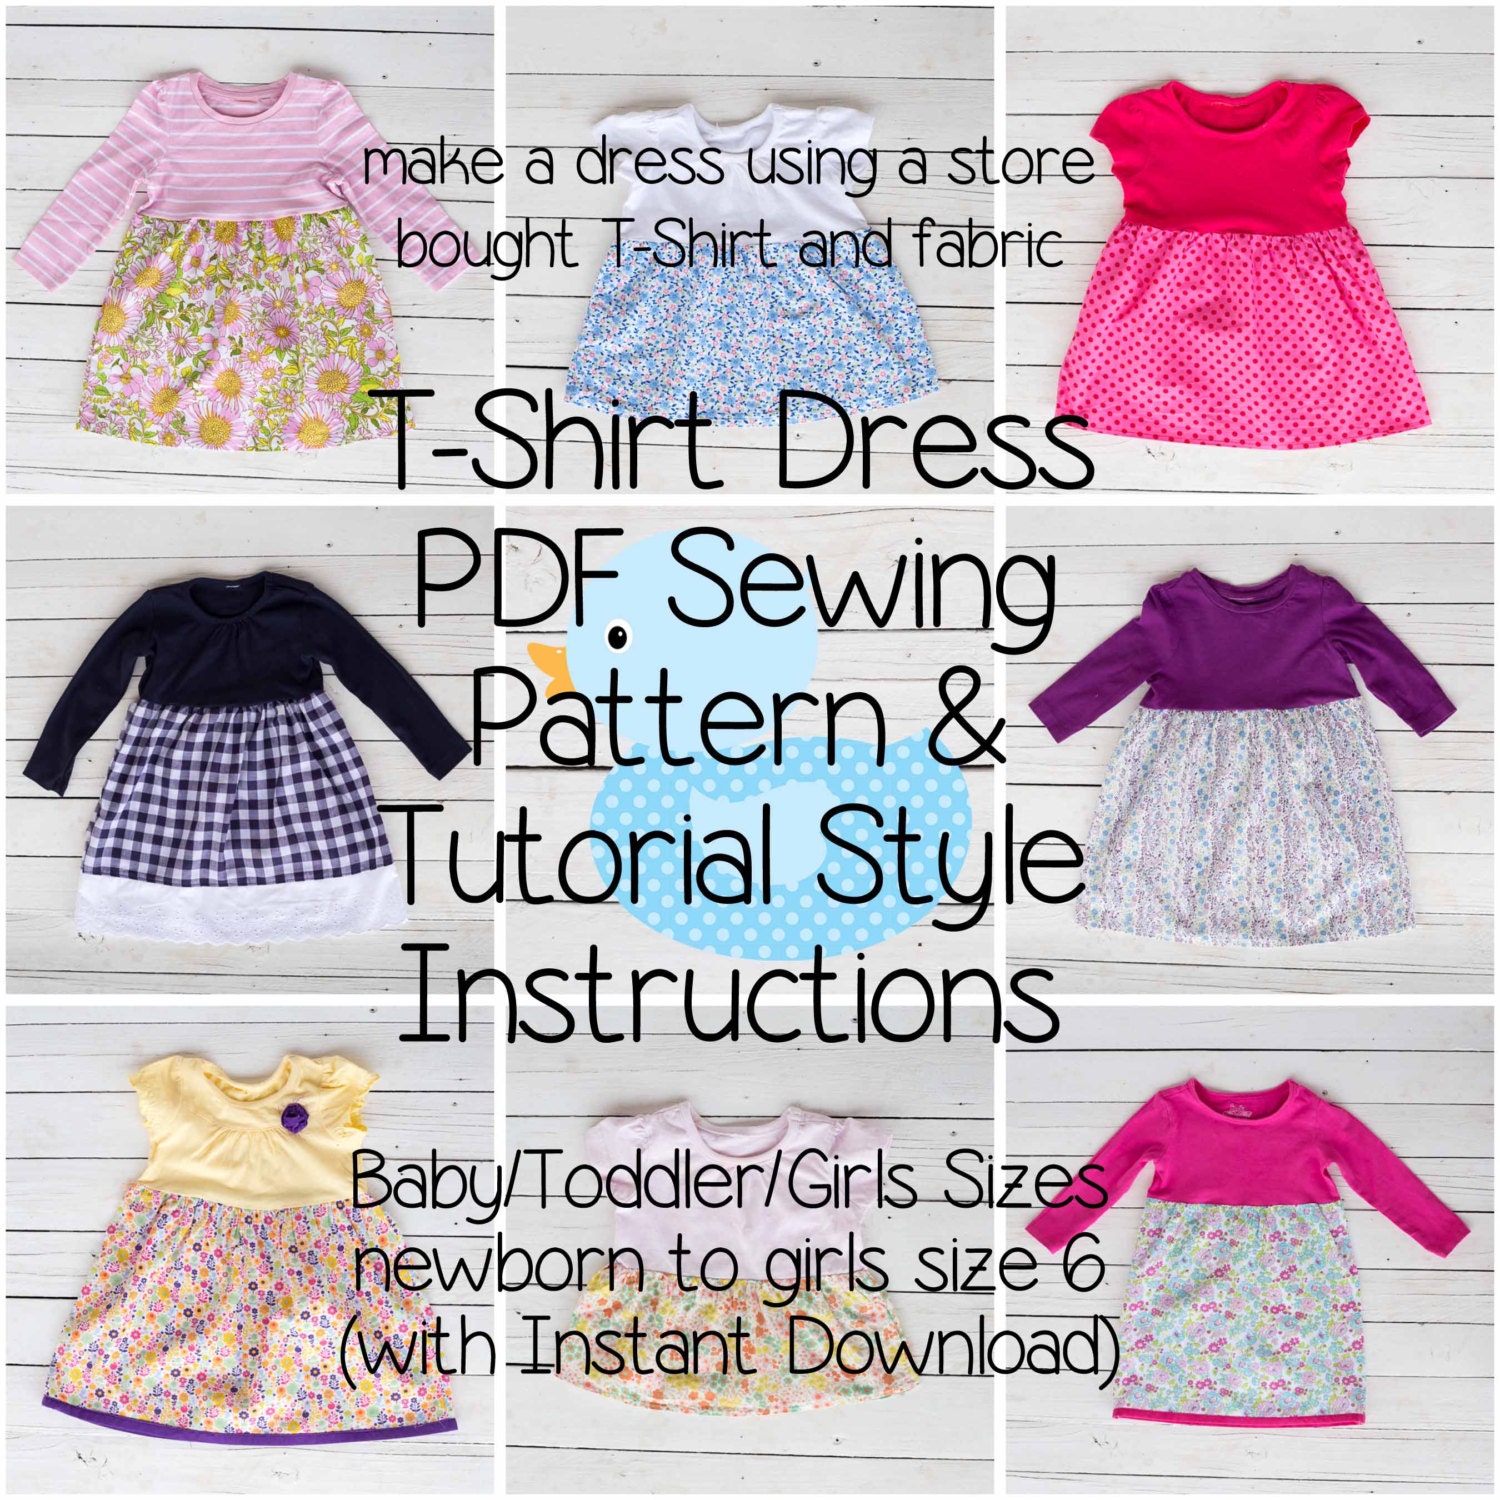 T-Shirt Dress PDF Sewing Pattern & Tutorial Style Instructions